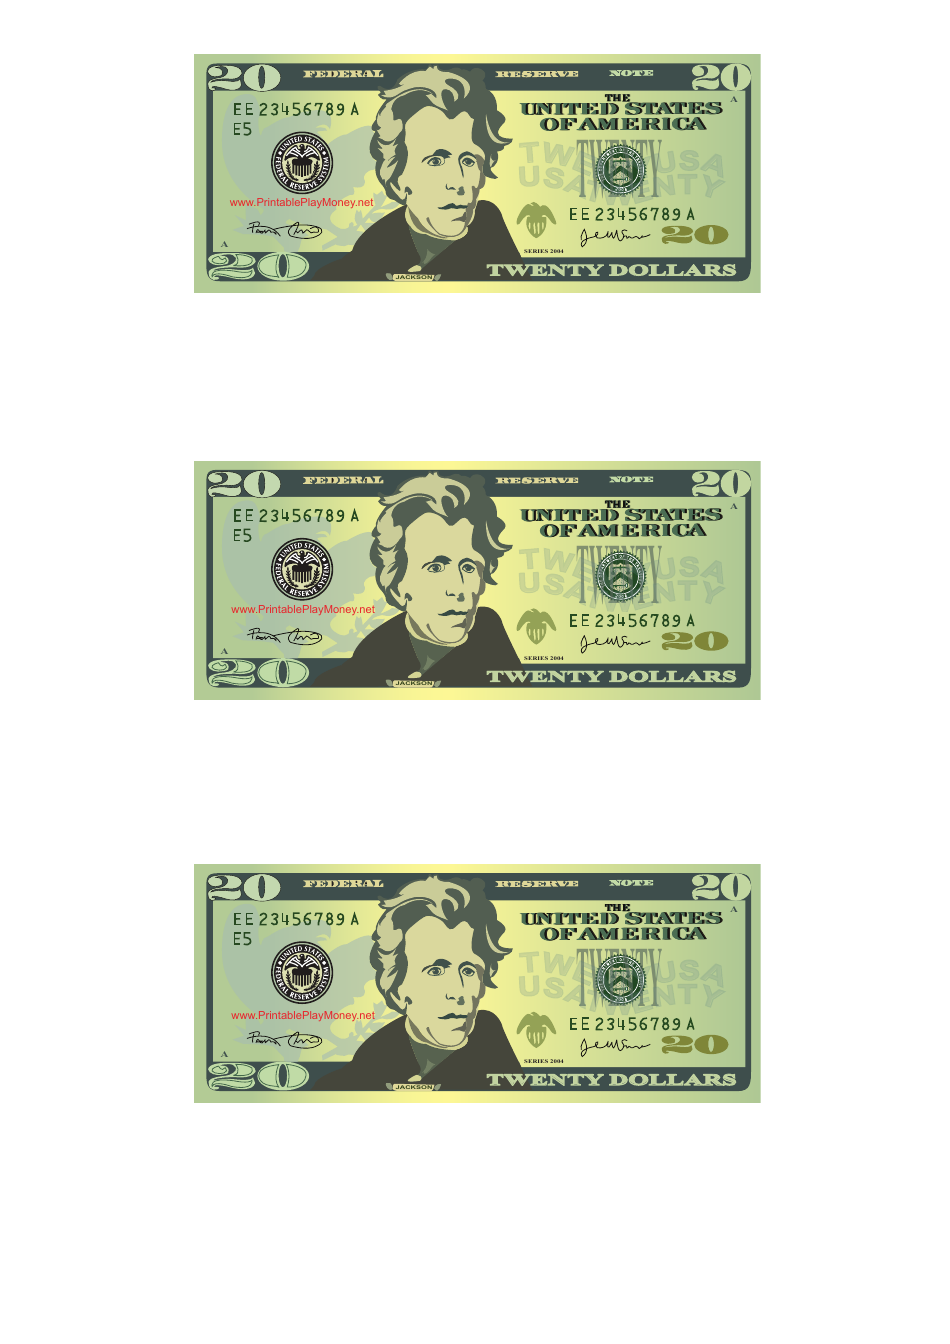 20 dollar bill template - A customizable and professional design resembling a 20 dollar bill.